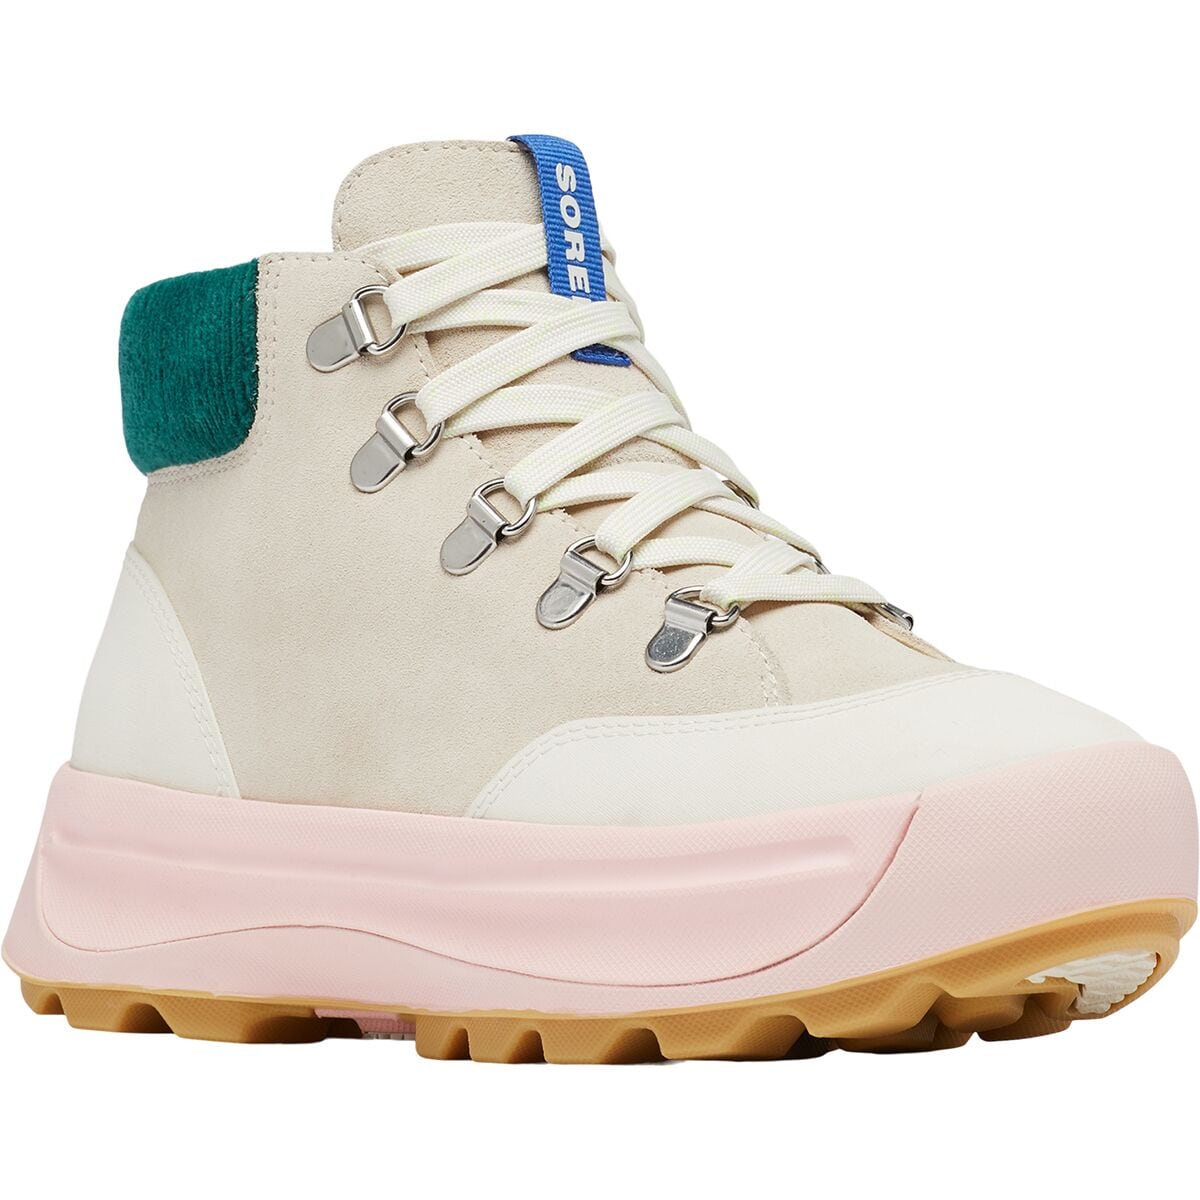 Ona 503 Hiker Shoe - Women